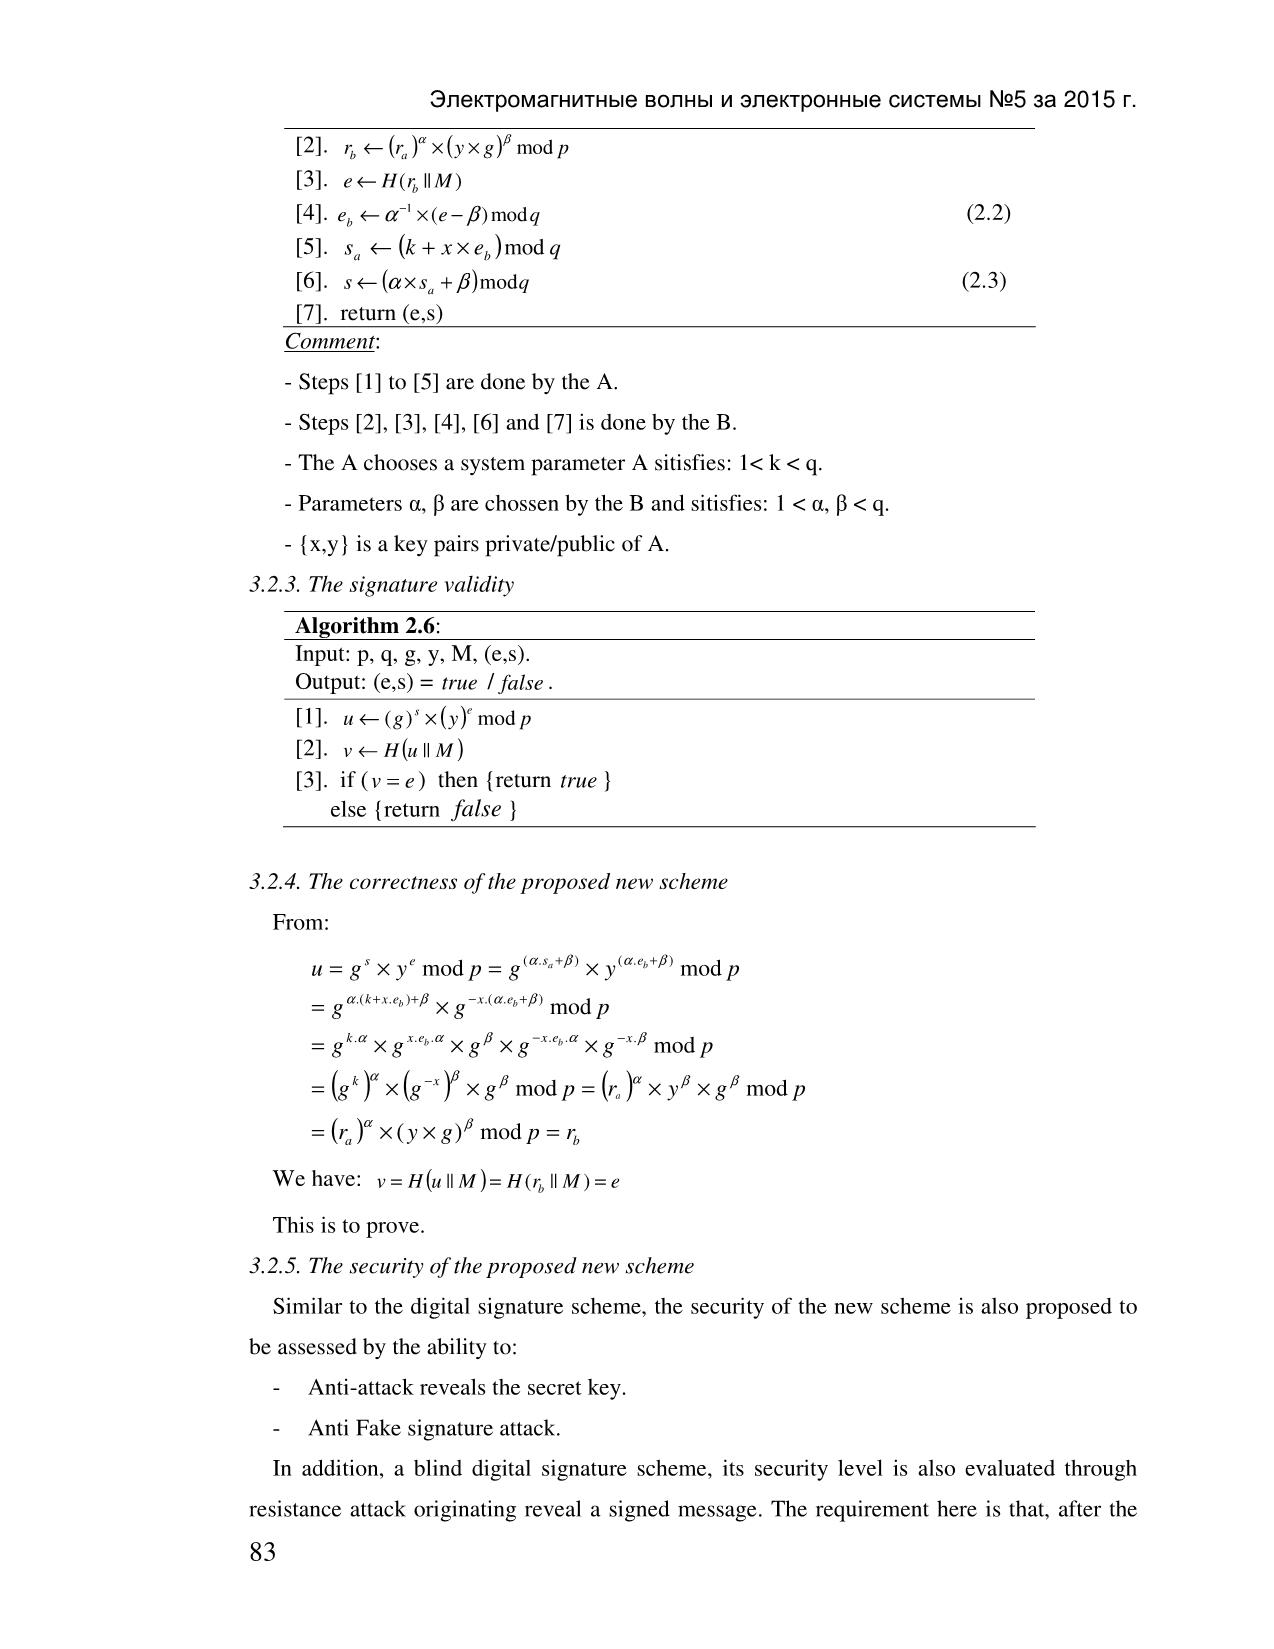 Blind signature scheme based on discrete logarithm problem trang 8